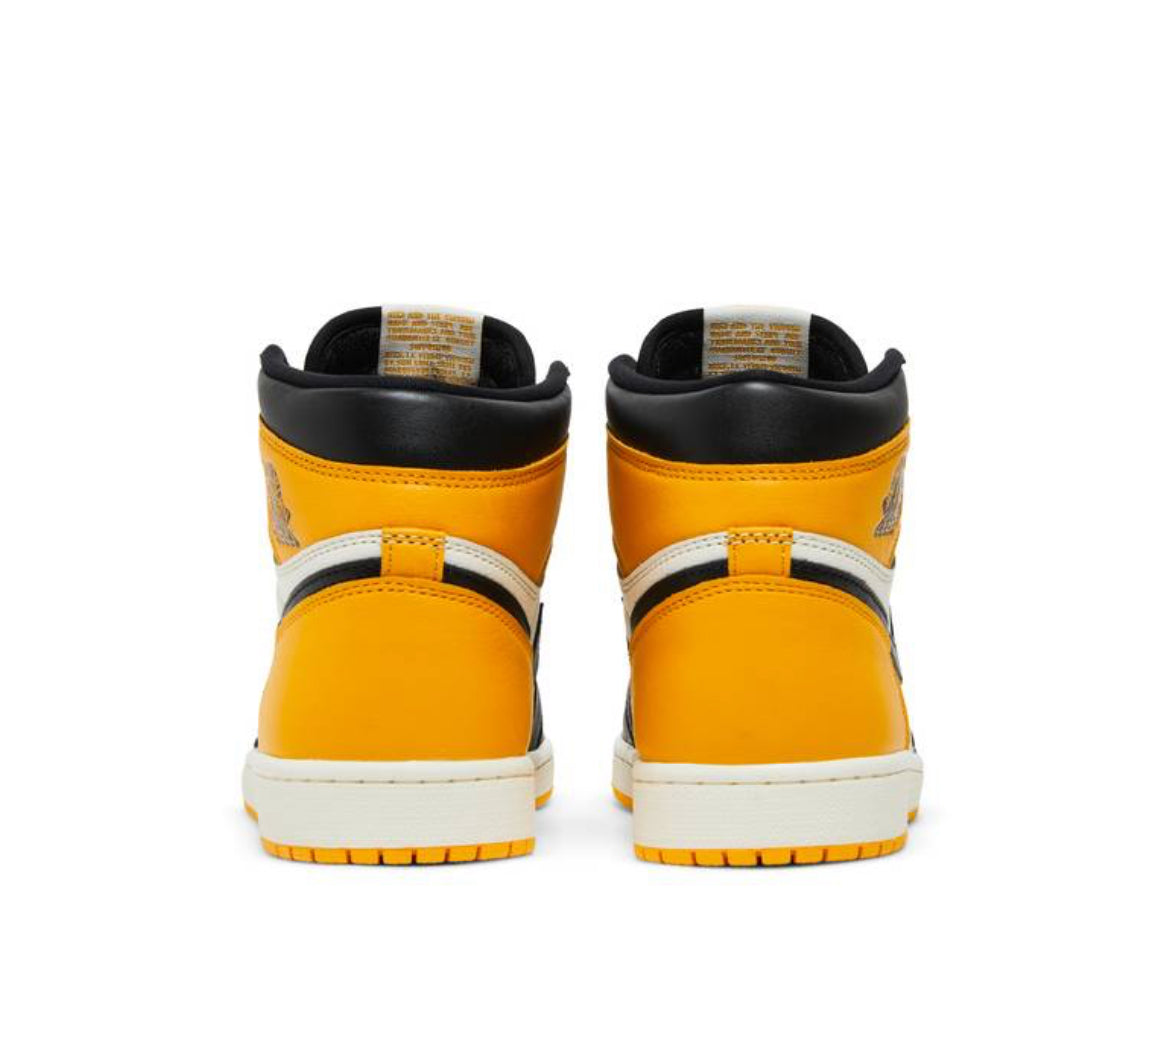 Jordan 1 High Yellow Toe “Taxi”